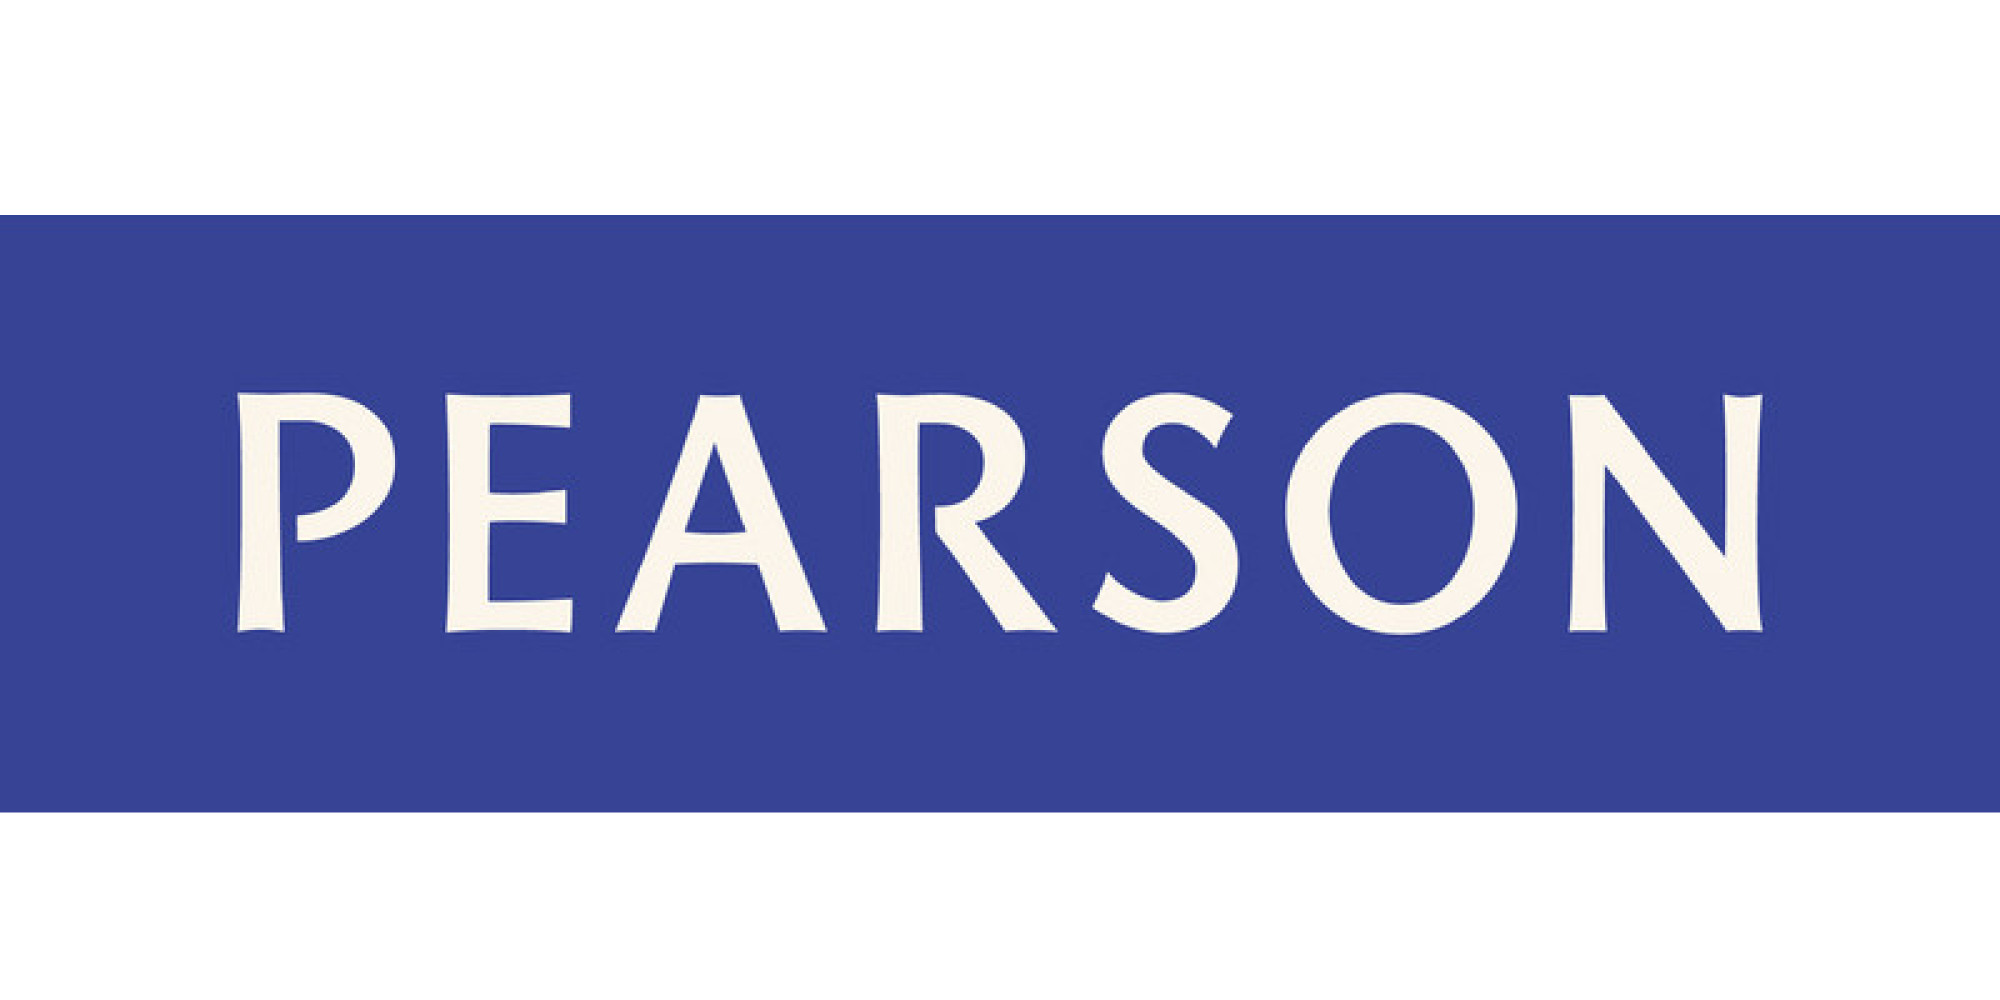 pearson education